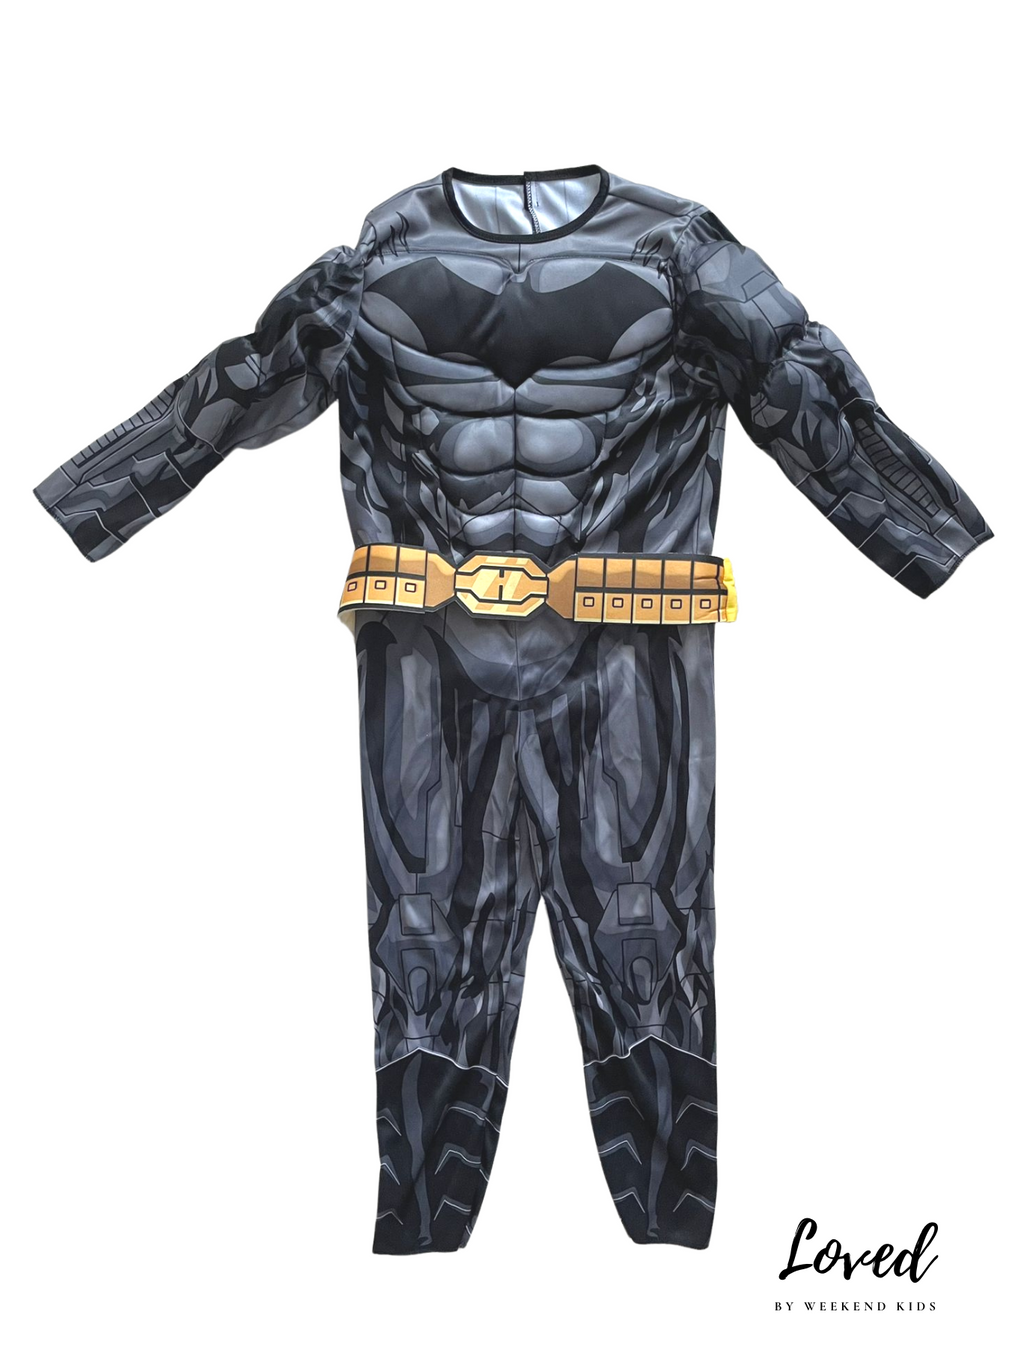 Bruce Batman Costume (Loved)